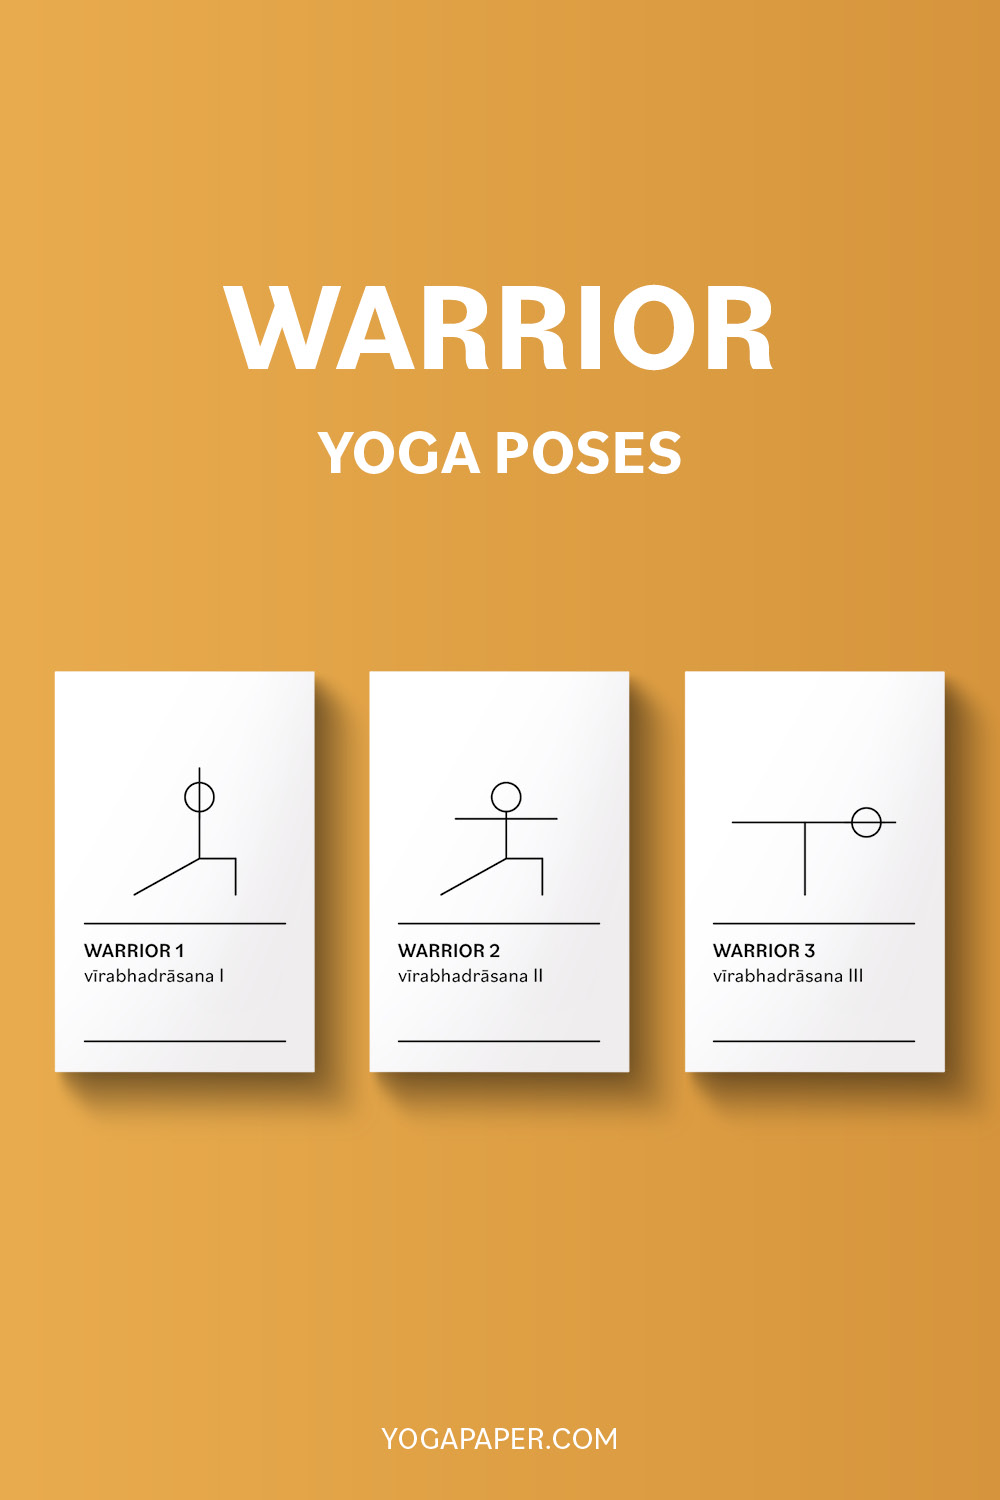 Beginner's Guide to Yoga - HathaYoga.com